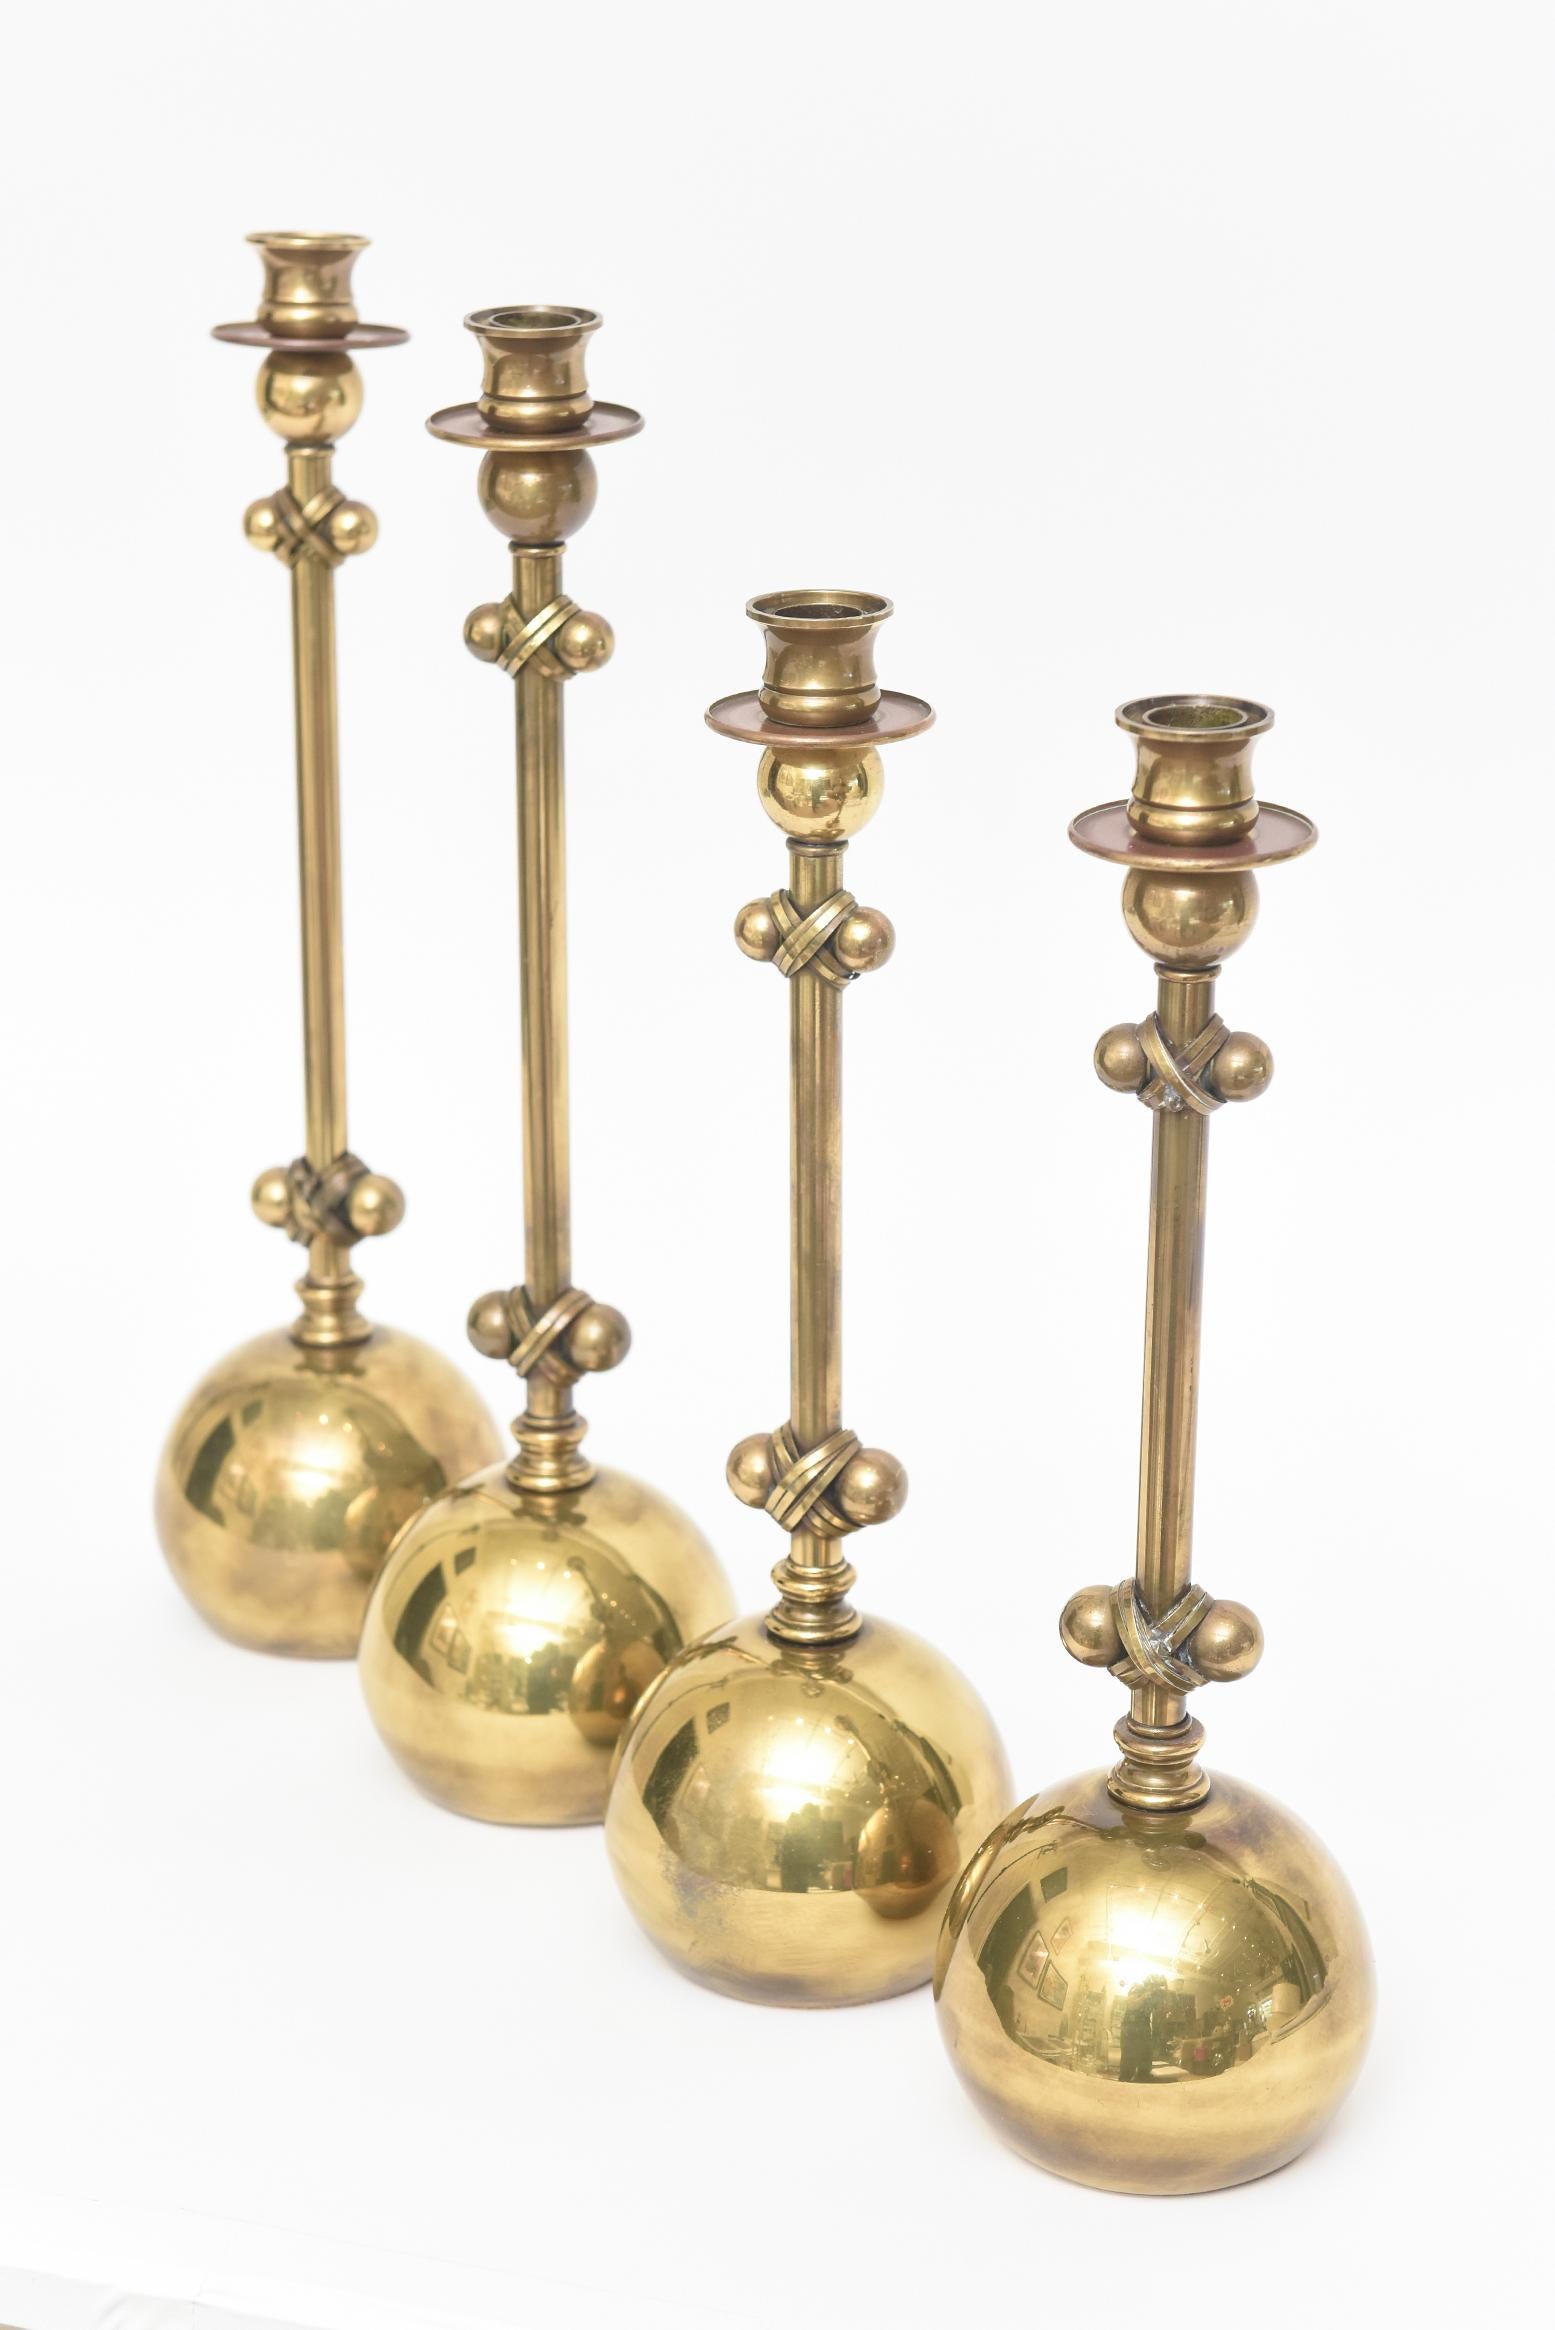 Modern Vintage Chapman Brass Ball and Campaign Candlesticks Set of 4